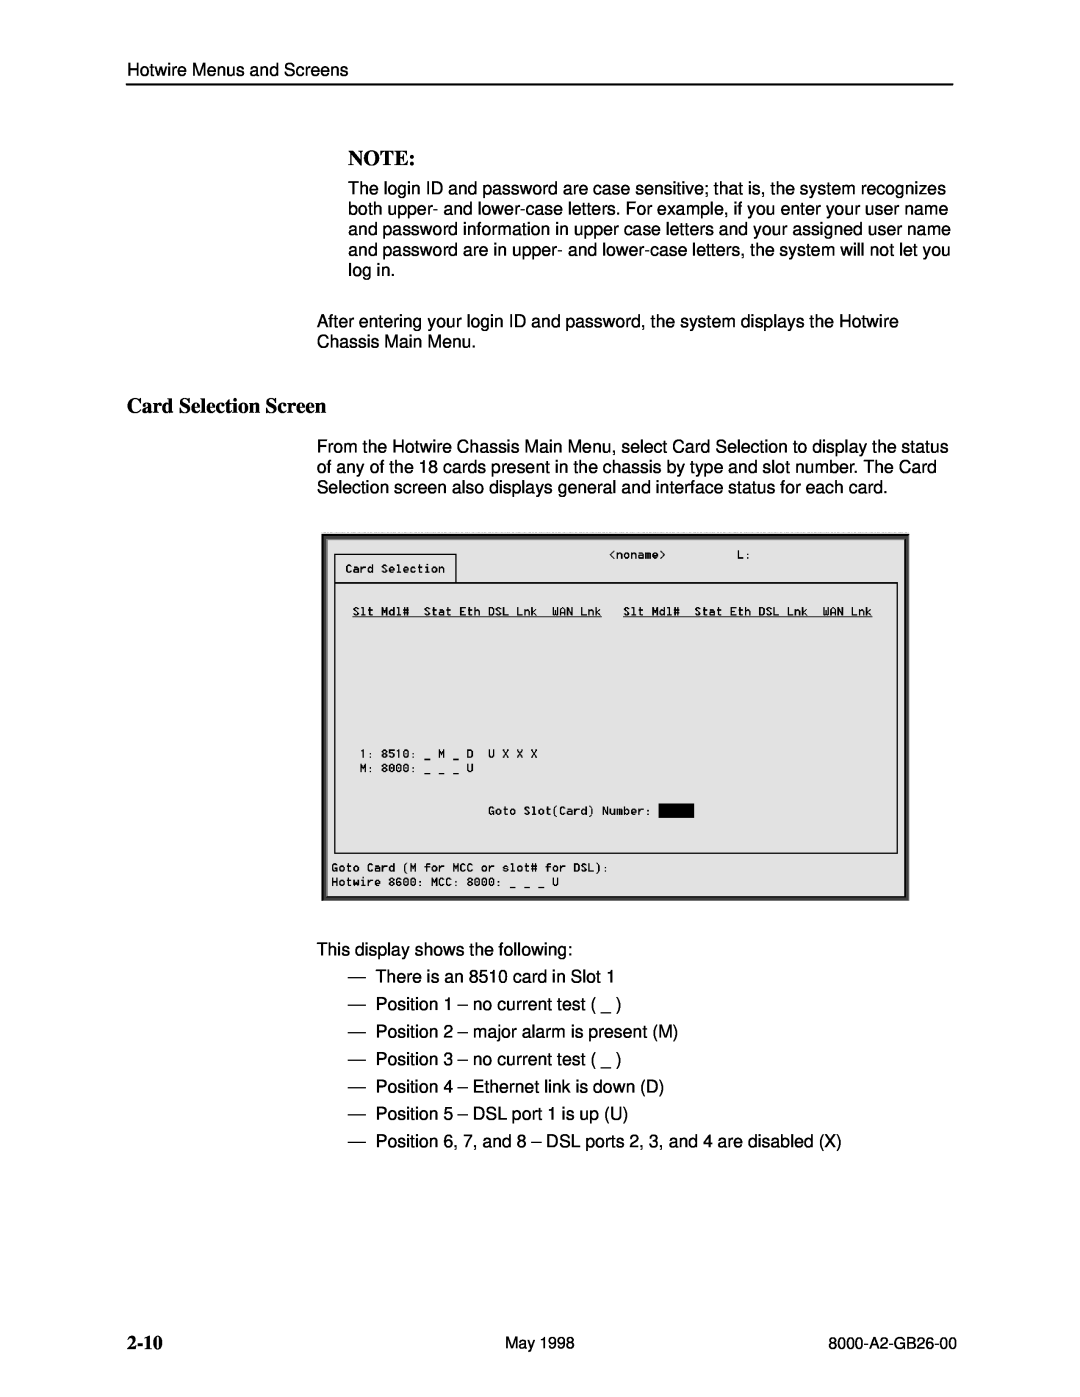 Paradyne 8310 MVL, 8510 DSL manual Card Selection Screen, 2-10 